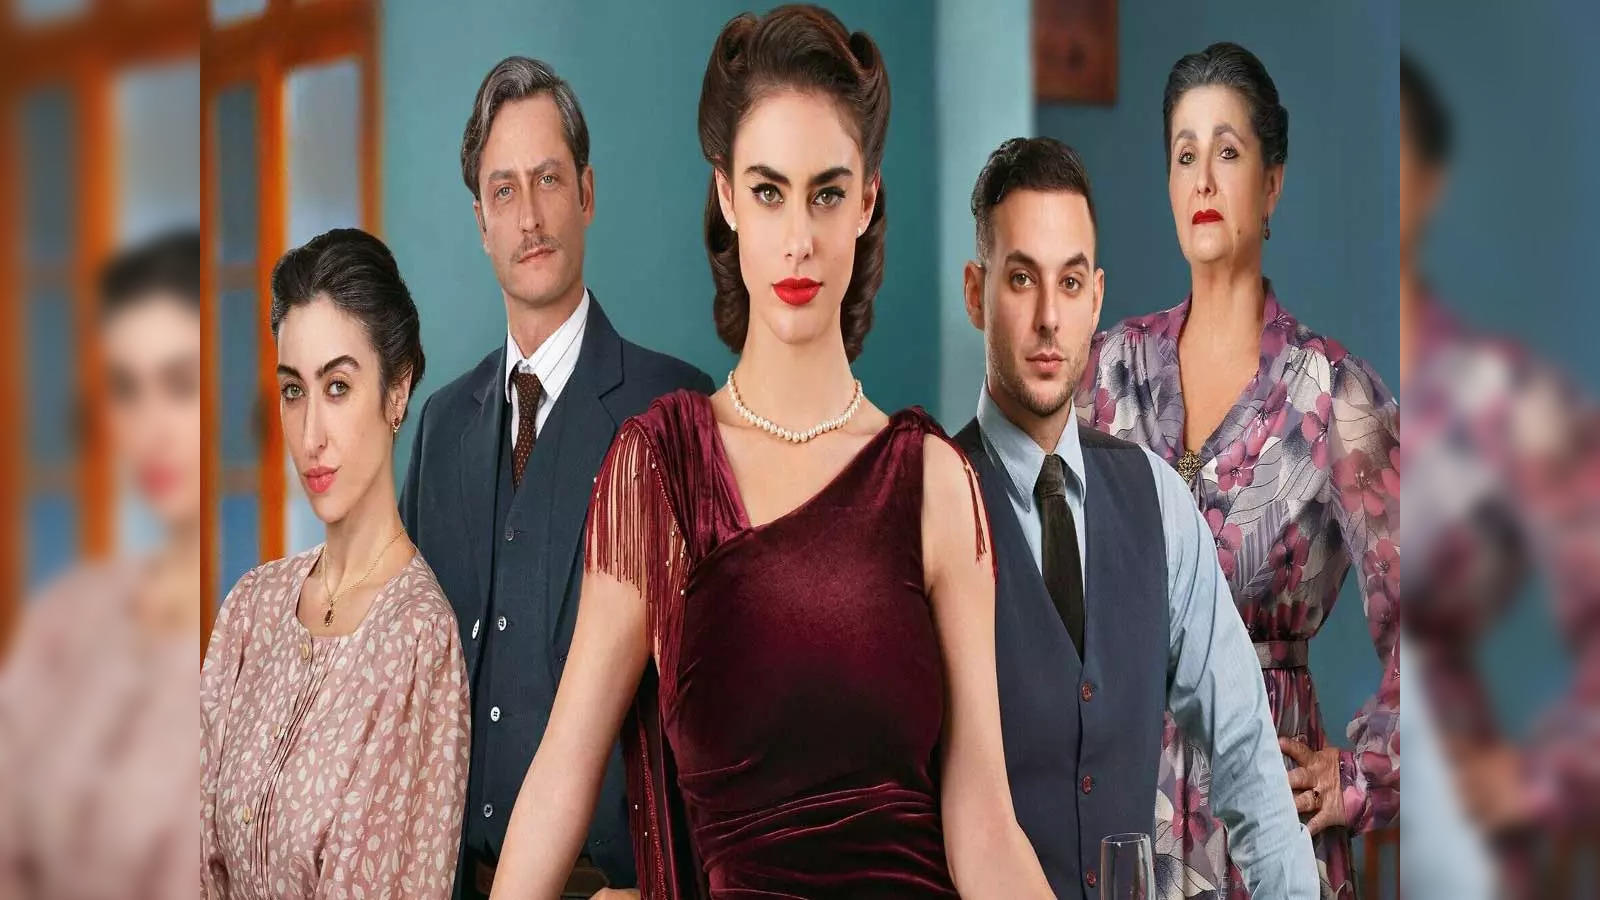 Israeli drama 'Beauty Queen of Jerusalem' makes Netflix debut